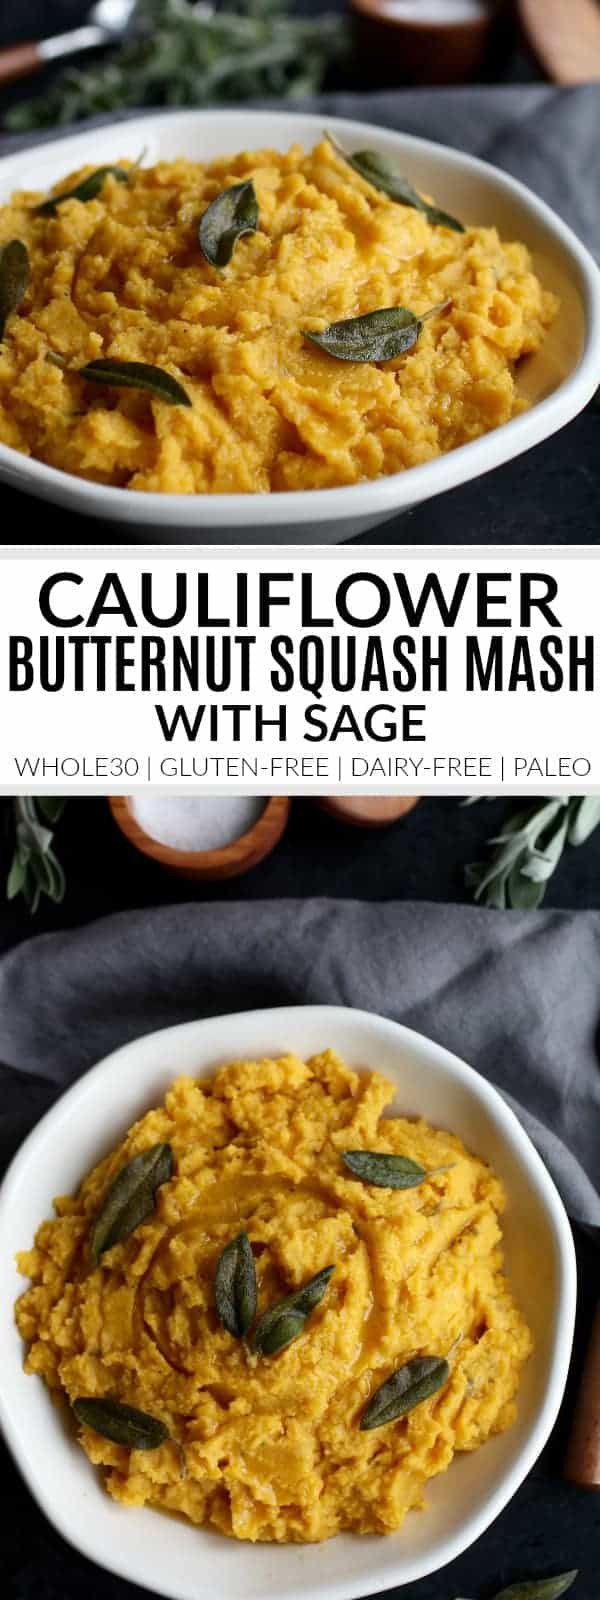 Cauliflower Butternut Squash Mash with Sage | butternut squash recipes | easy butternut squash recipe | whole30 side dish | gluten-free side dish | dairy-free side dish | paleo side dish || The Real Food Dietitians #whole30recipes #whole30sides #glutenfreesides #paleorecipe 